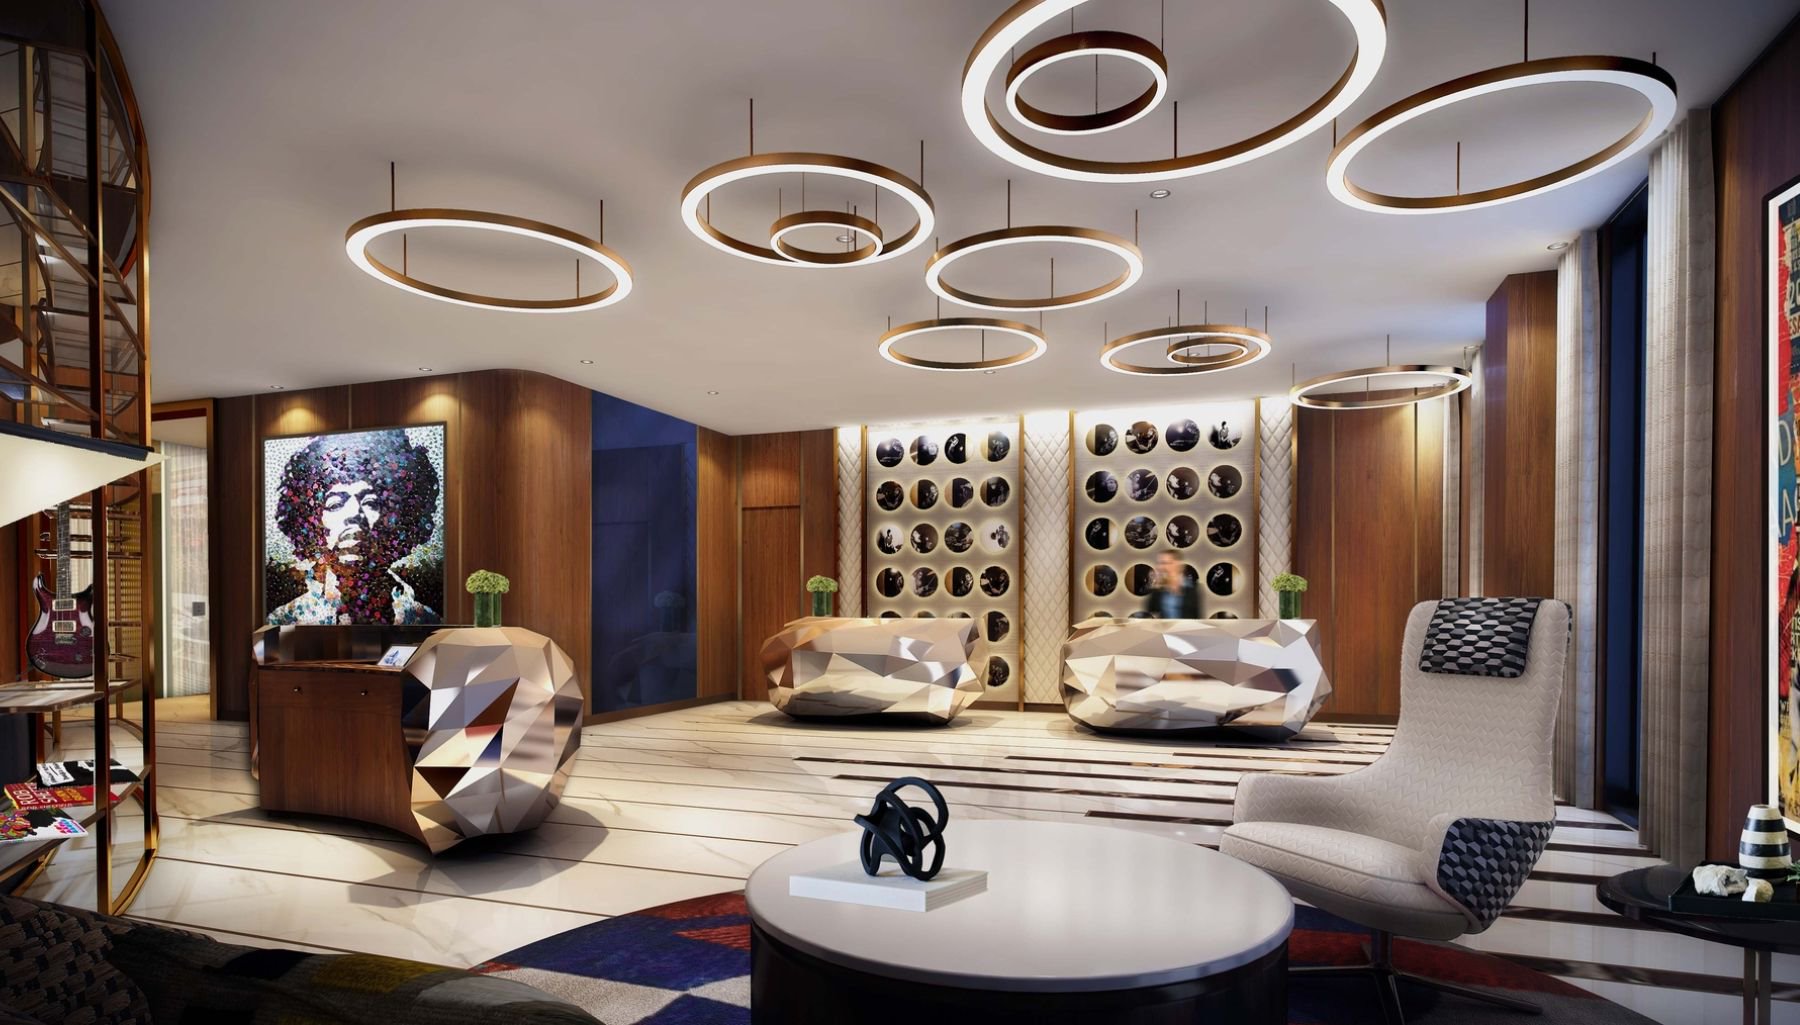 Luxury hotels opening in New York City in 2022 - Hard Rock Hotel 